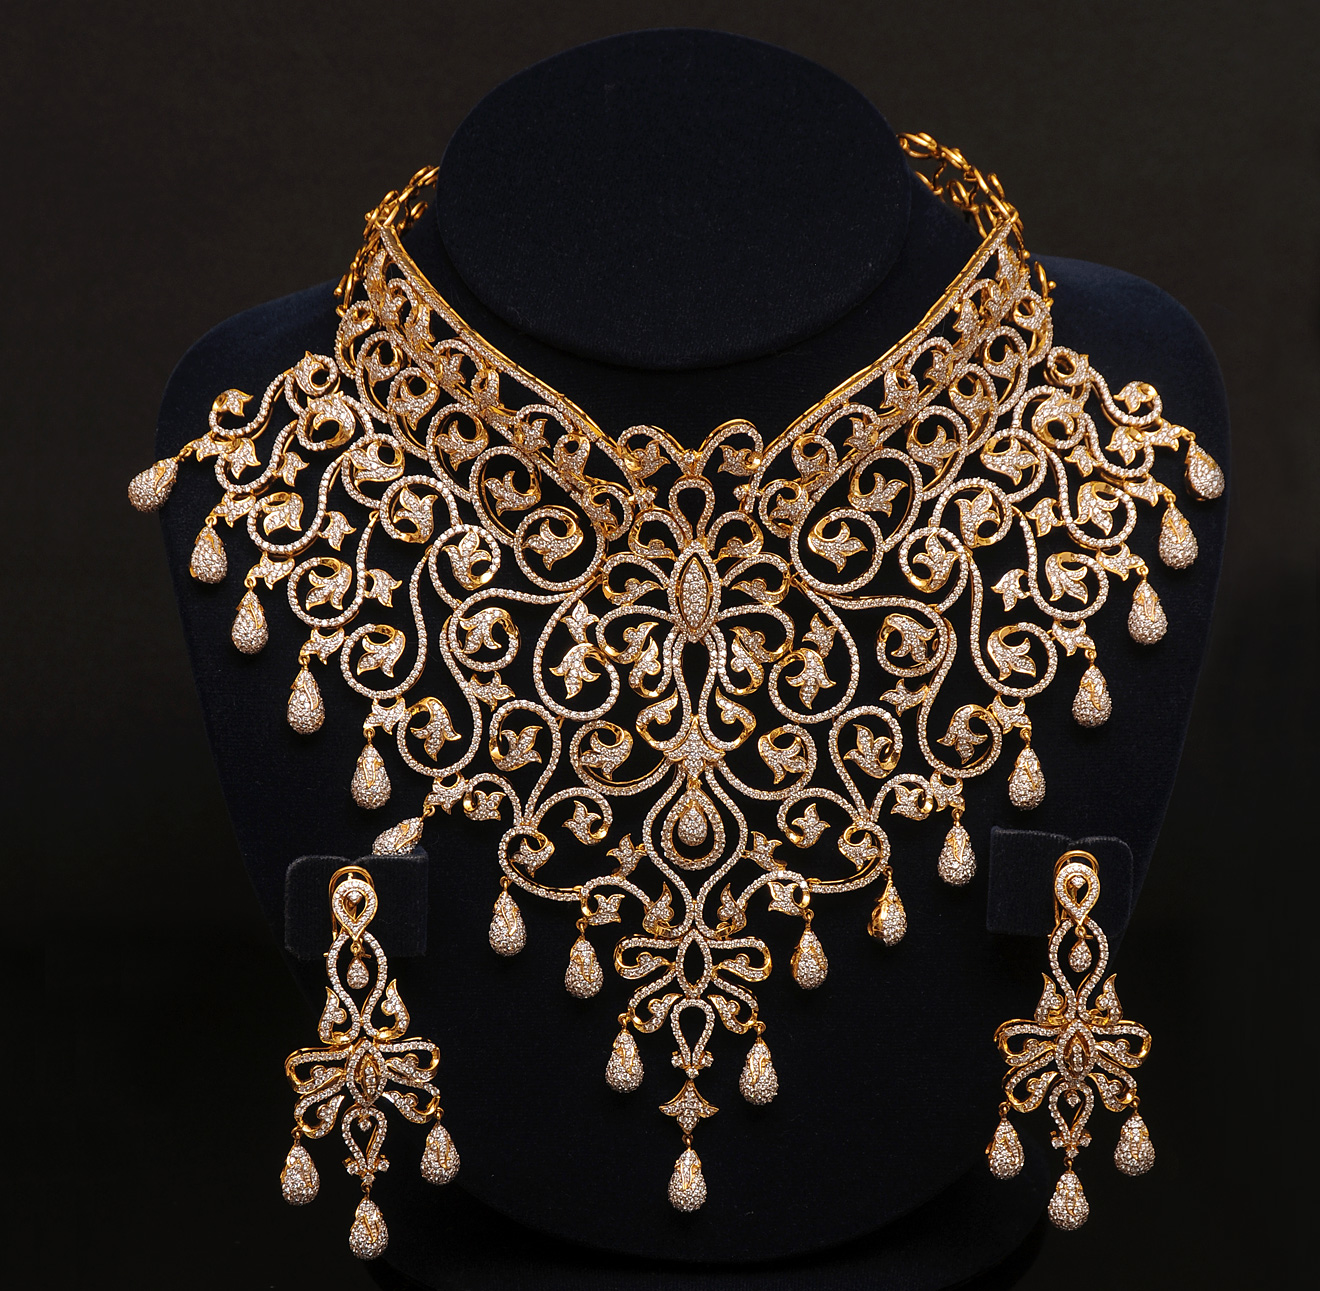 design Indian bridal jewellery